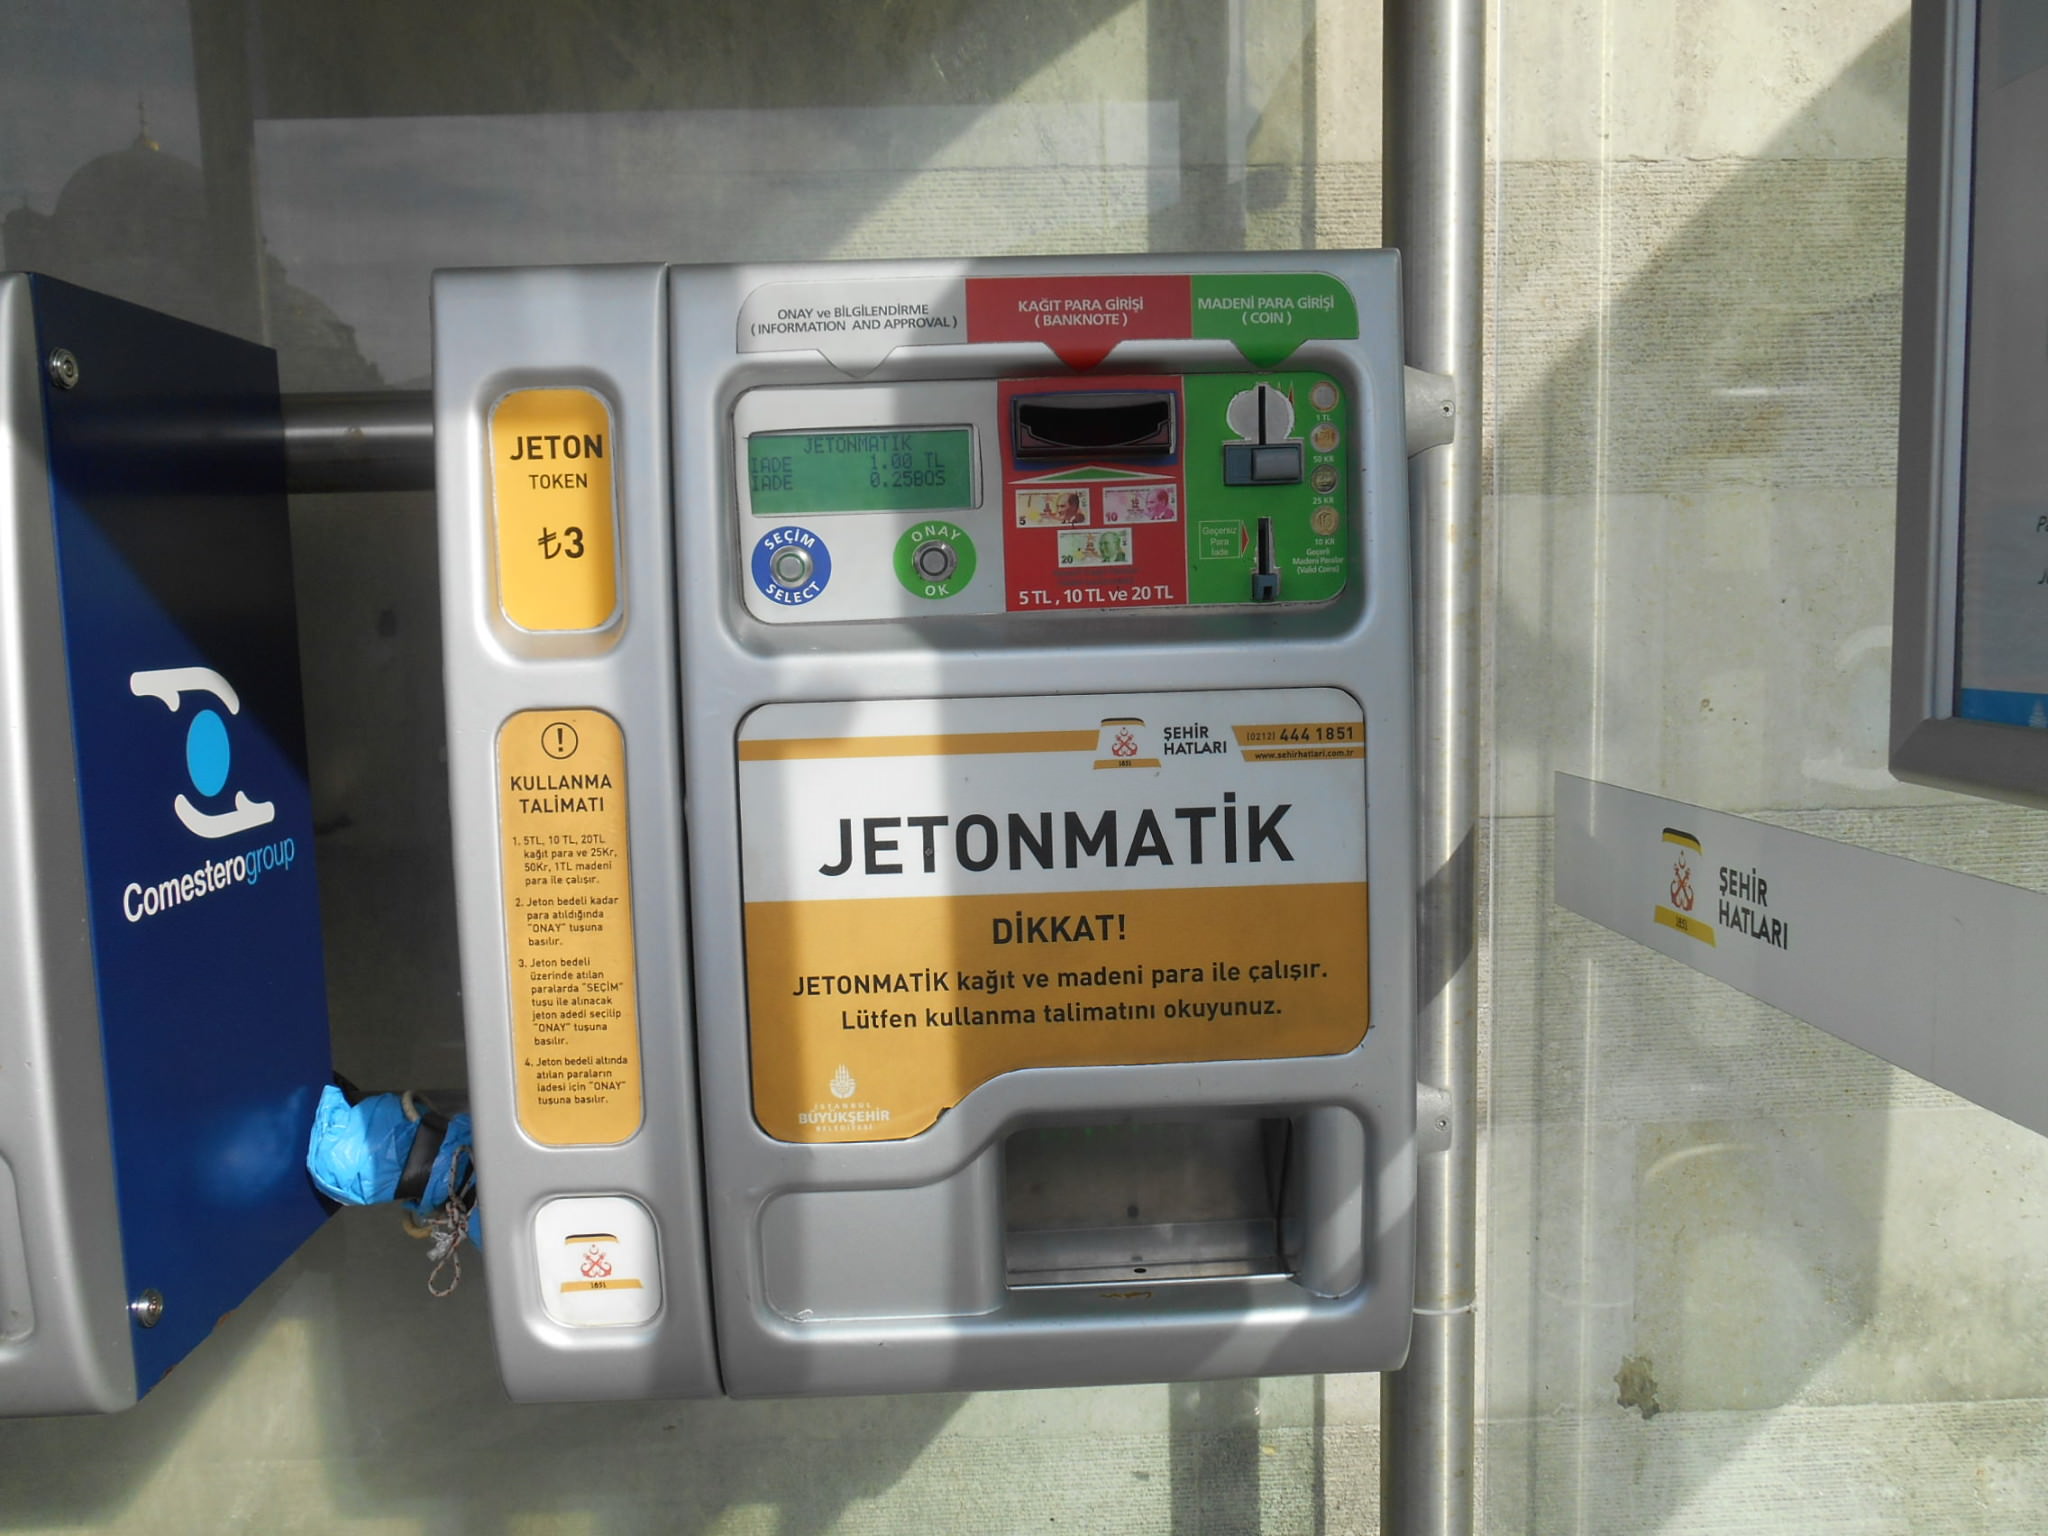 Jeton - The main Istanbul transport ticket